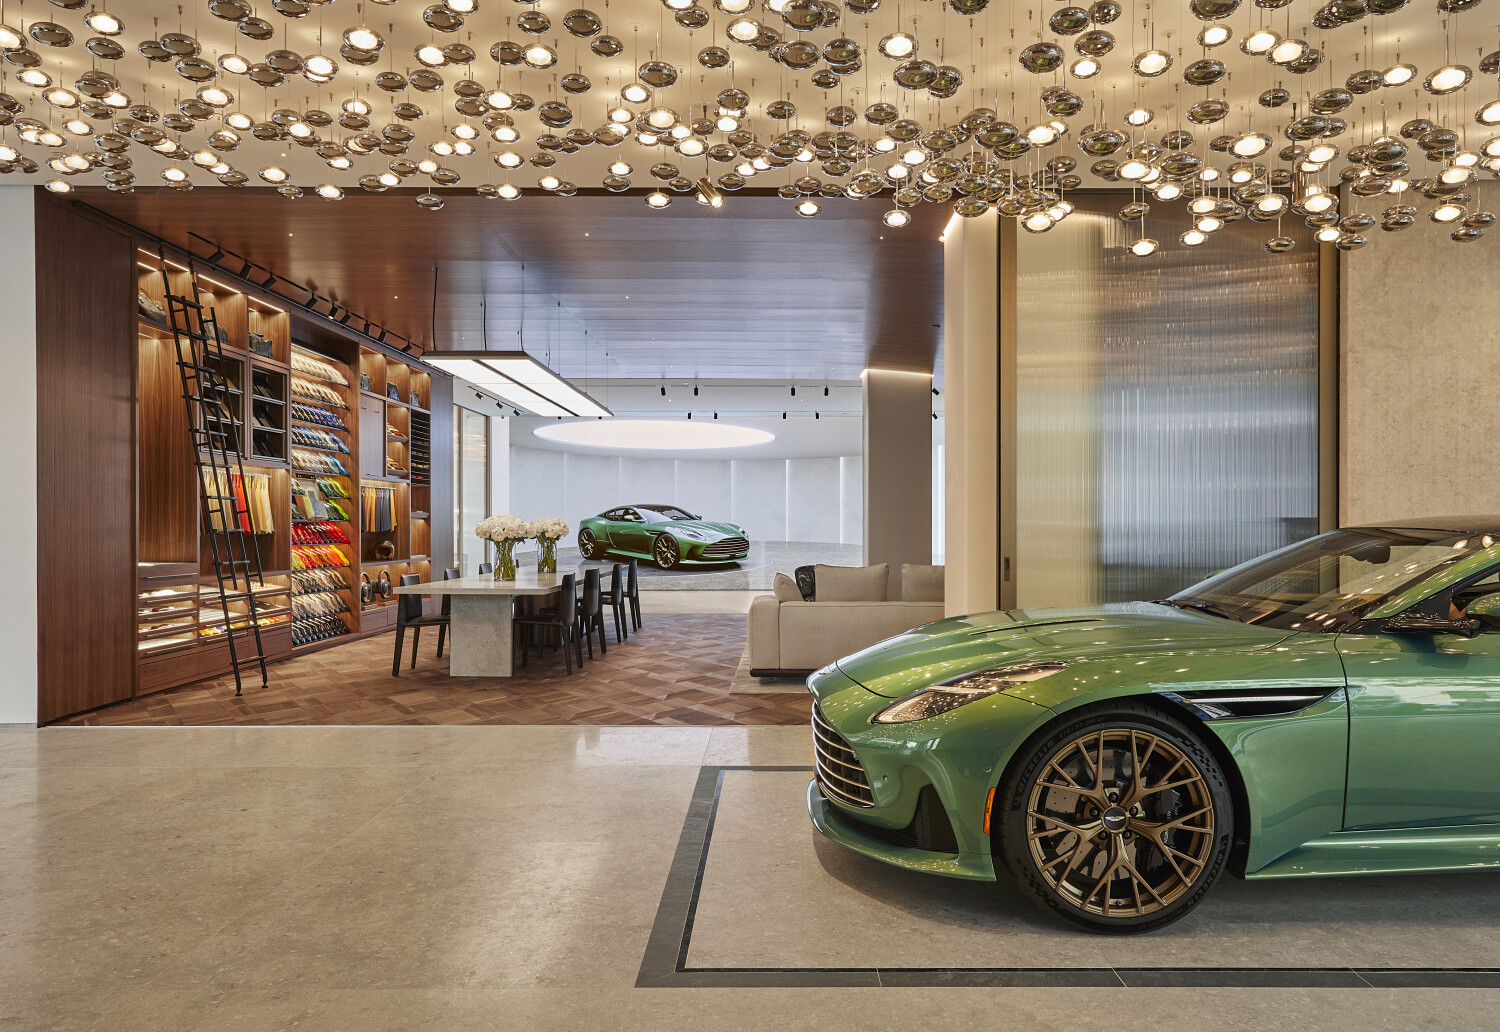 Aston Martin starts retail rethink by opening ultra-luxury dealership